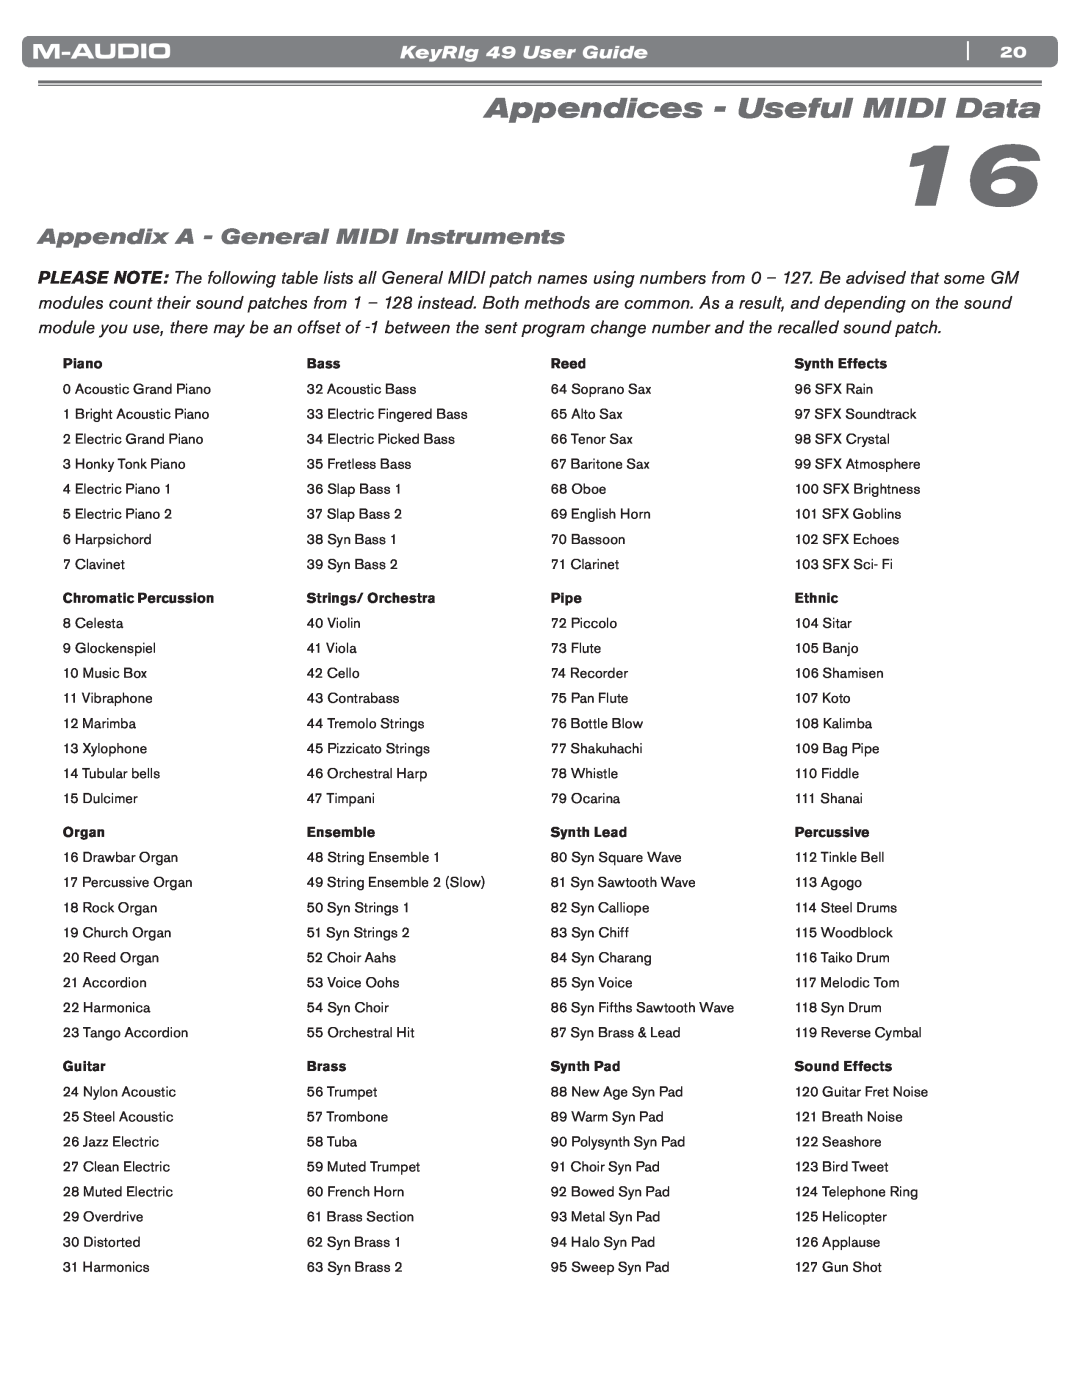 M-Audio manual Appendices - Useful MIDI Data, Appendix A - General MIDI Instruments, KeyRIg 49 User Guide 